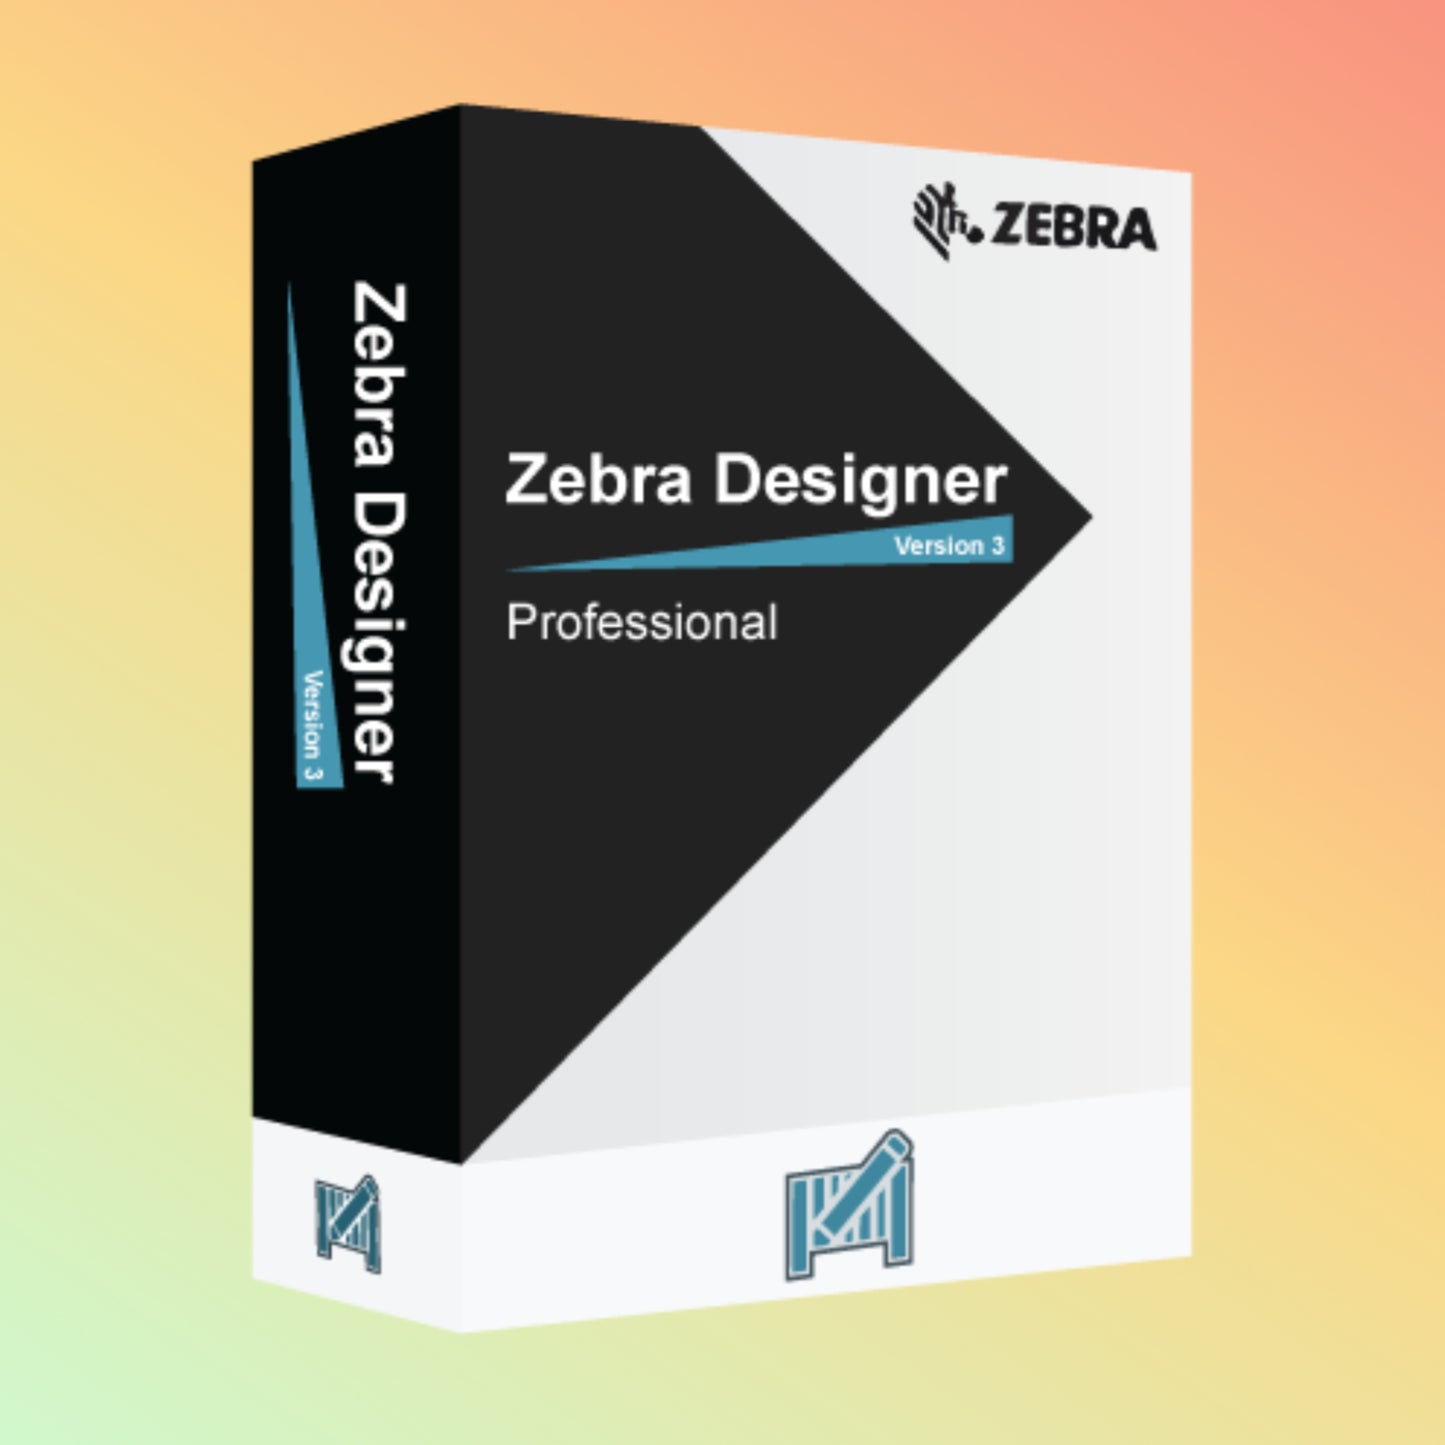 ZebraDesigner Pro 3: Advanced Label Design Software